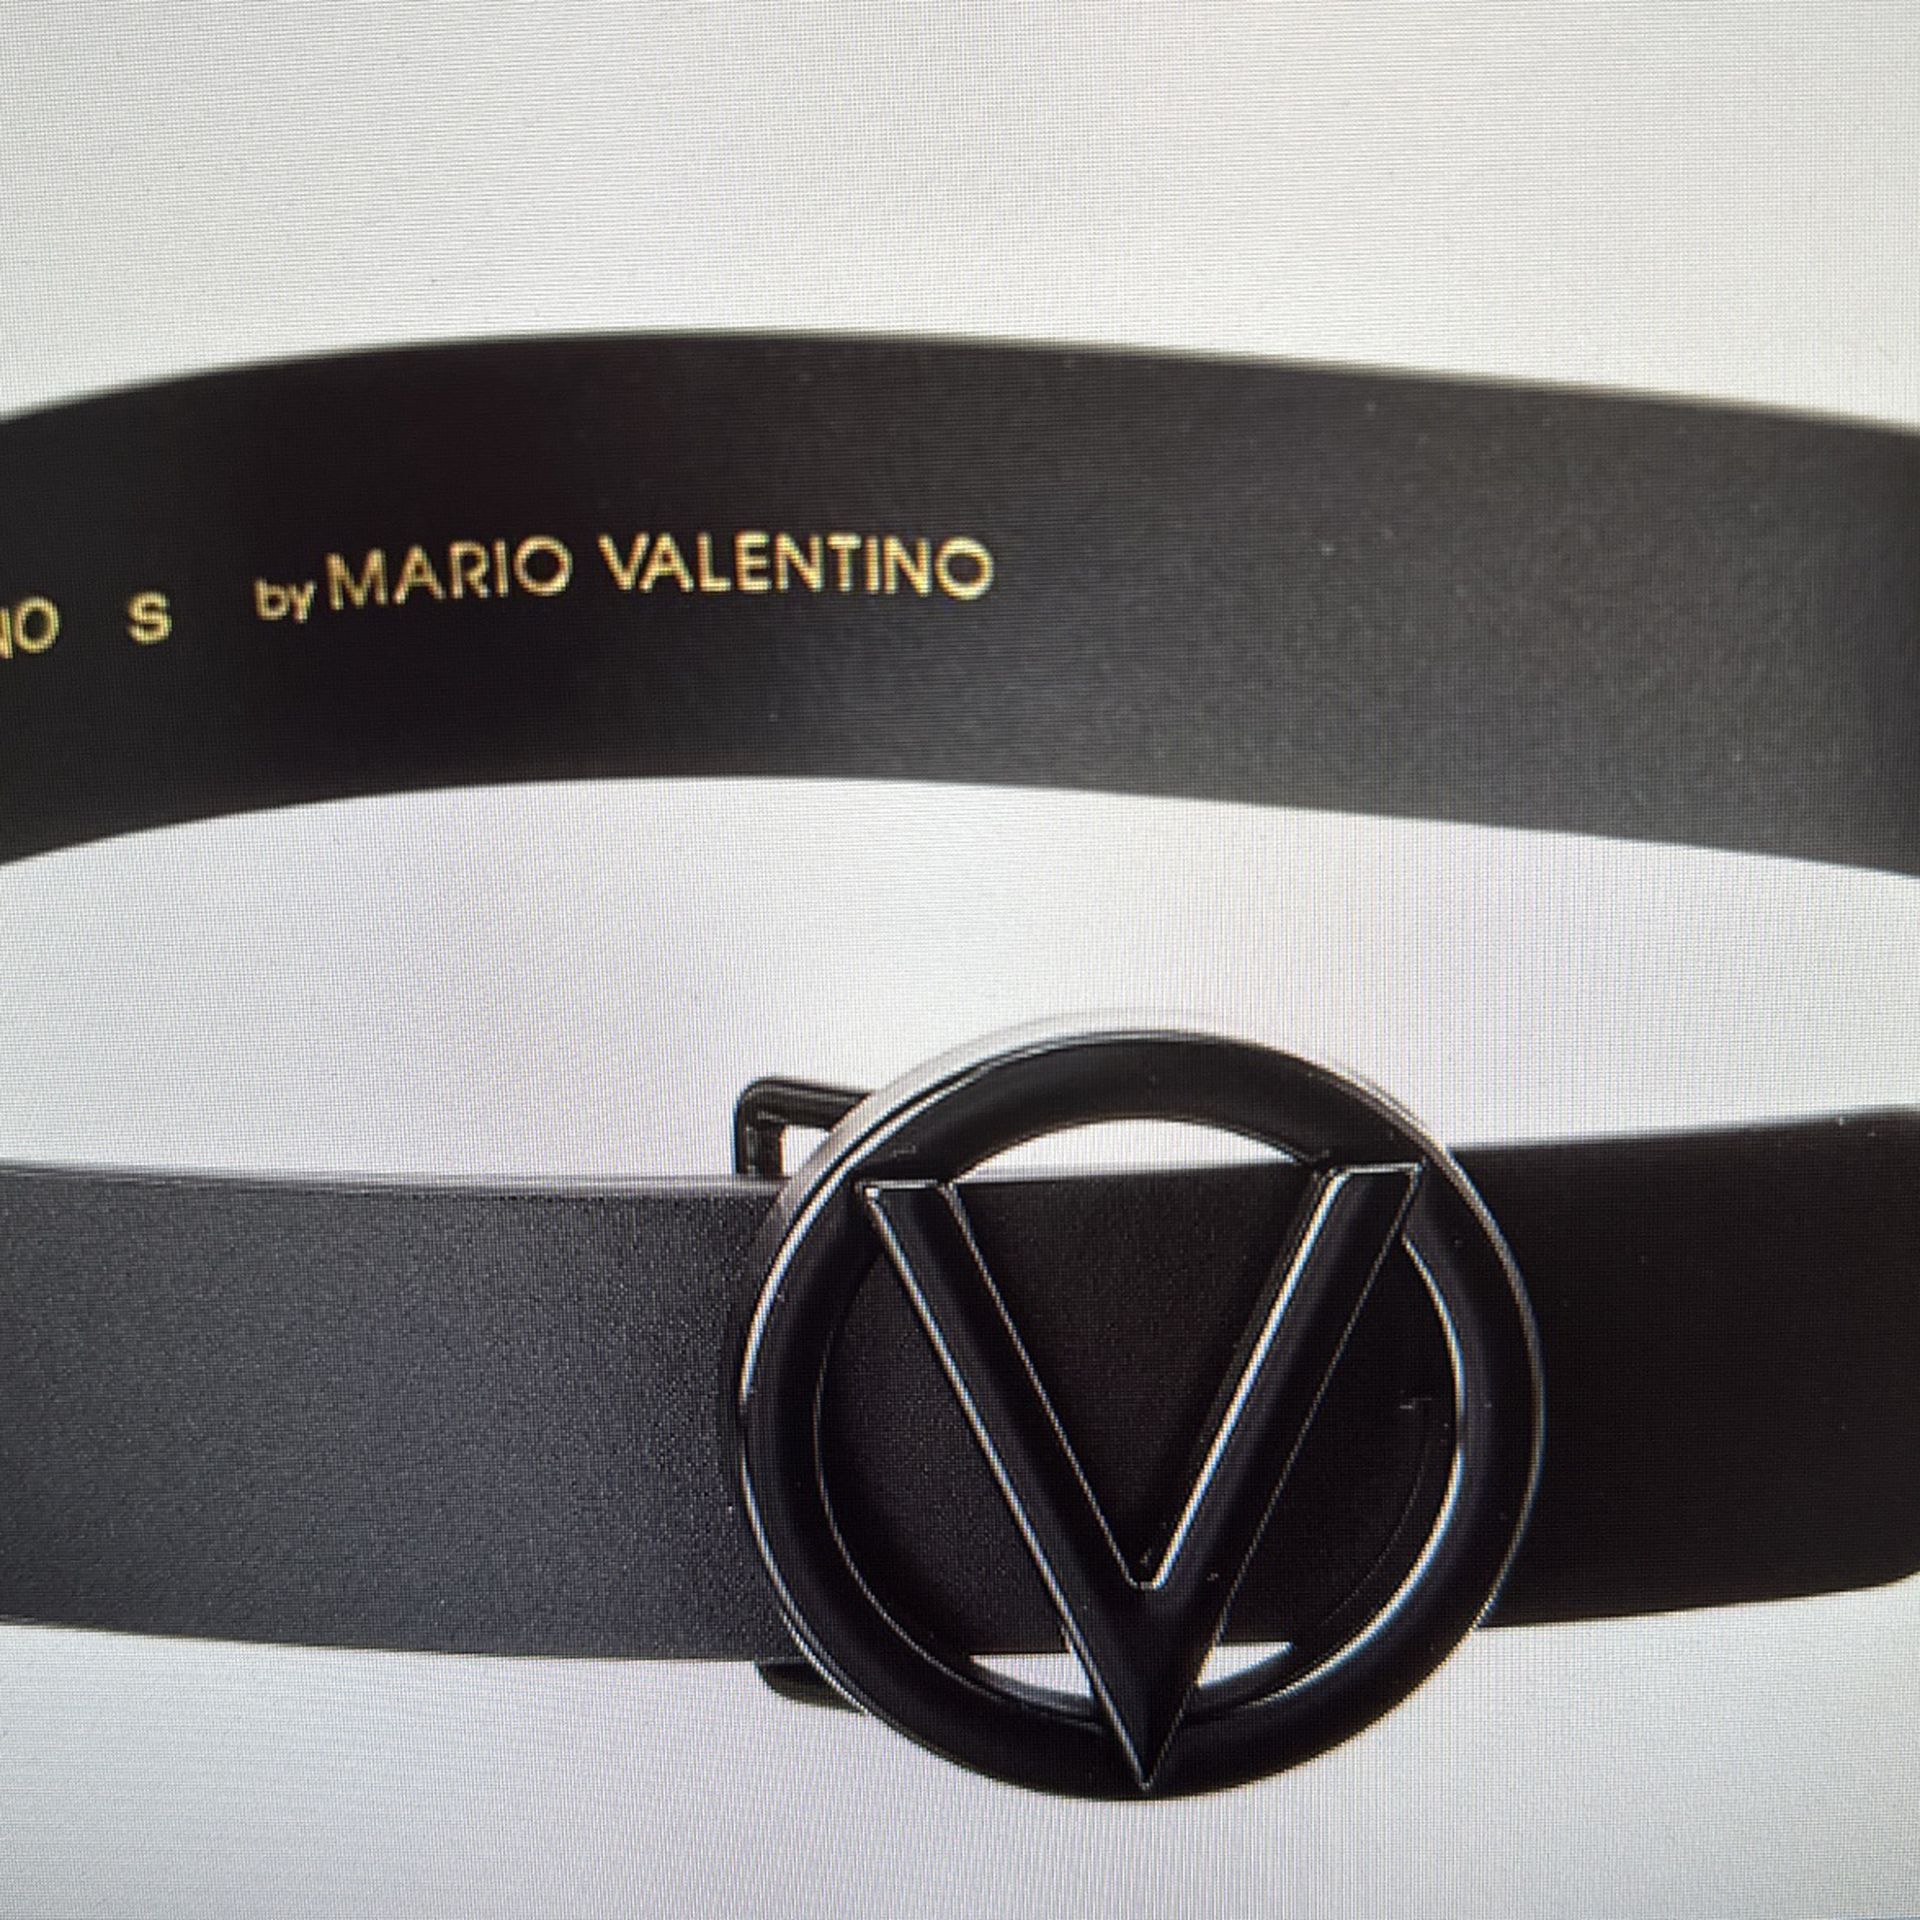 Valentino by Mario Valentino Giusy Leather Belt - Black - Medium